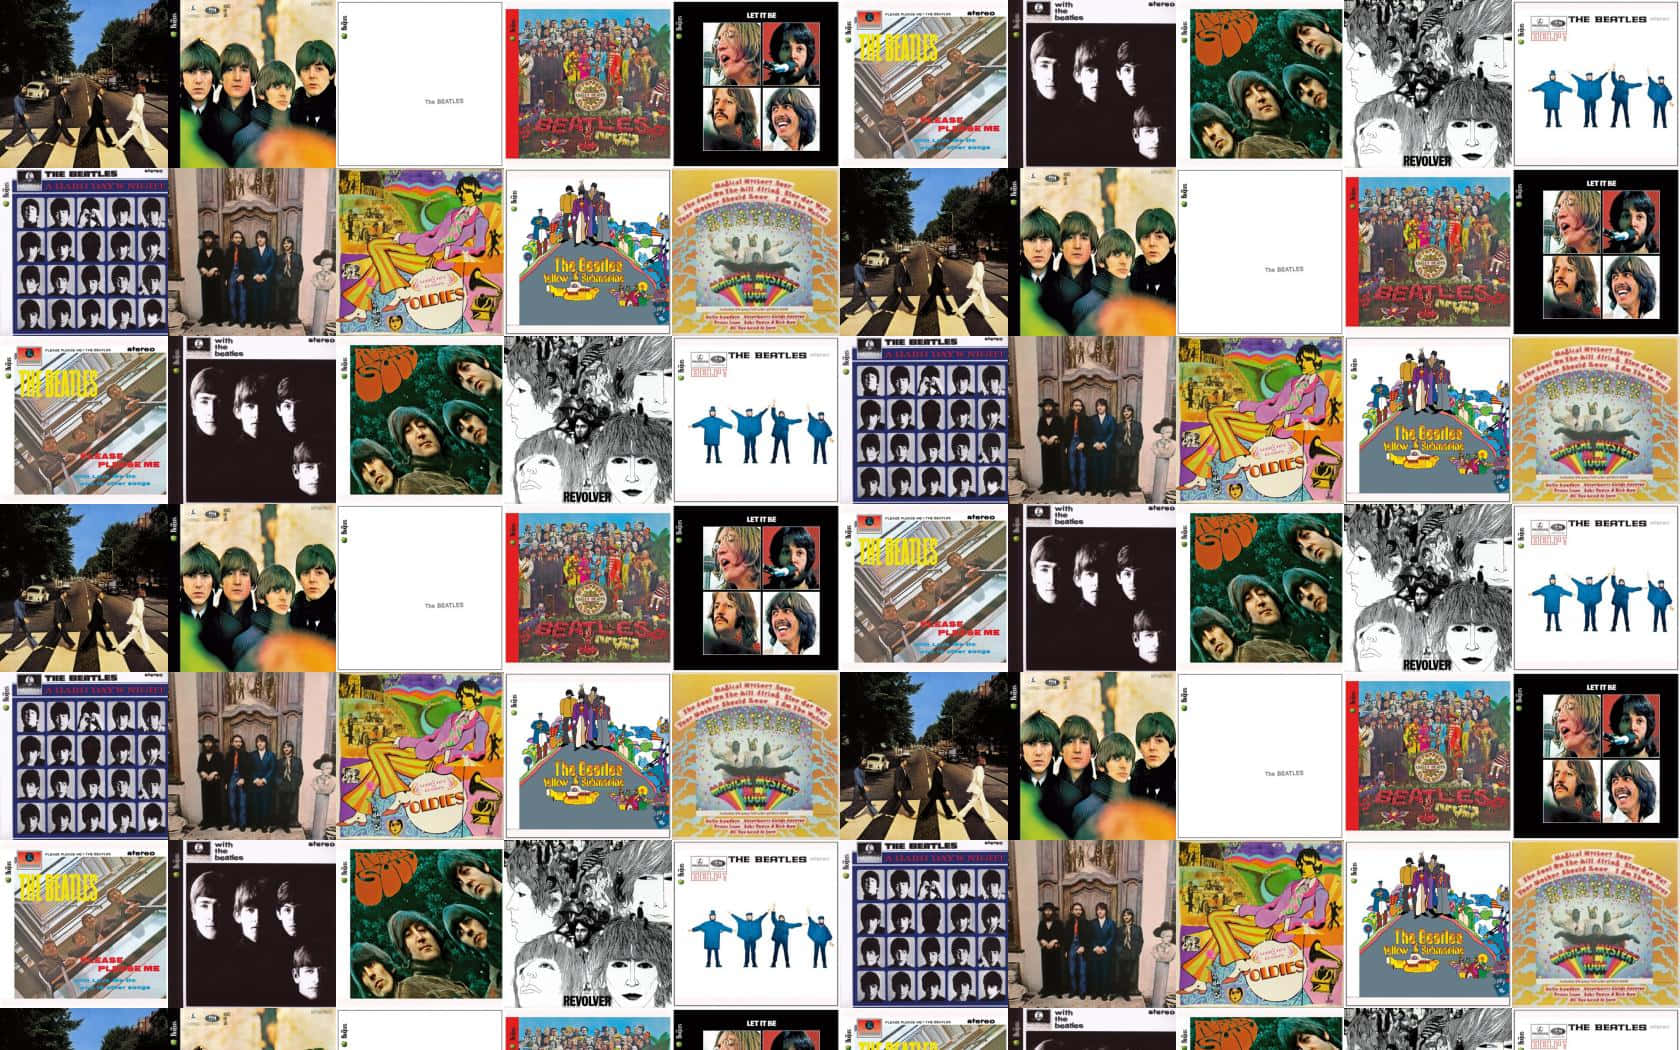 the beatles' album cover collage